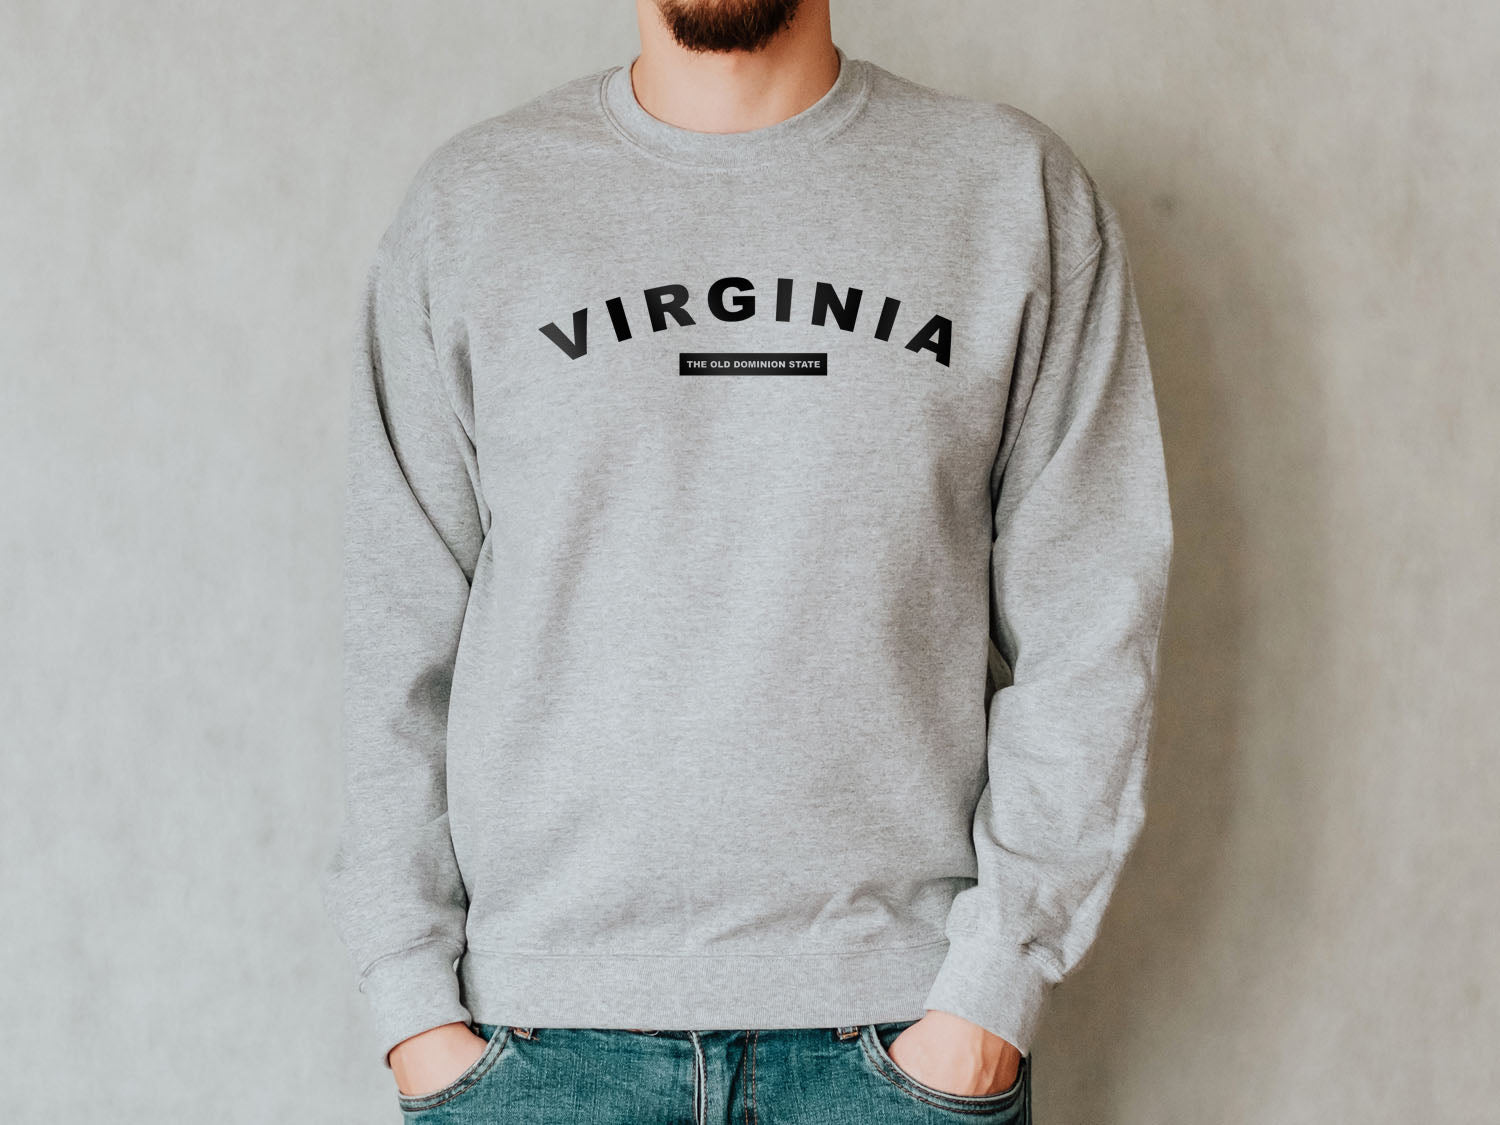 Virginia The Old Dominion State Sweatshirt - United States Name & Slogan Minimal Design Printed Sweatshirt